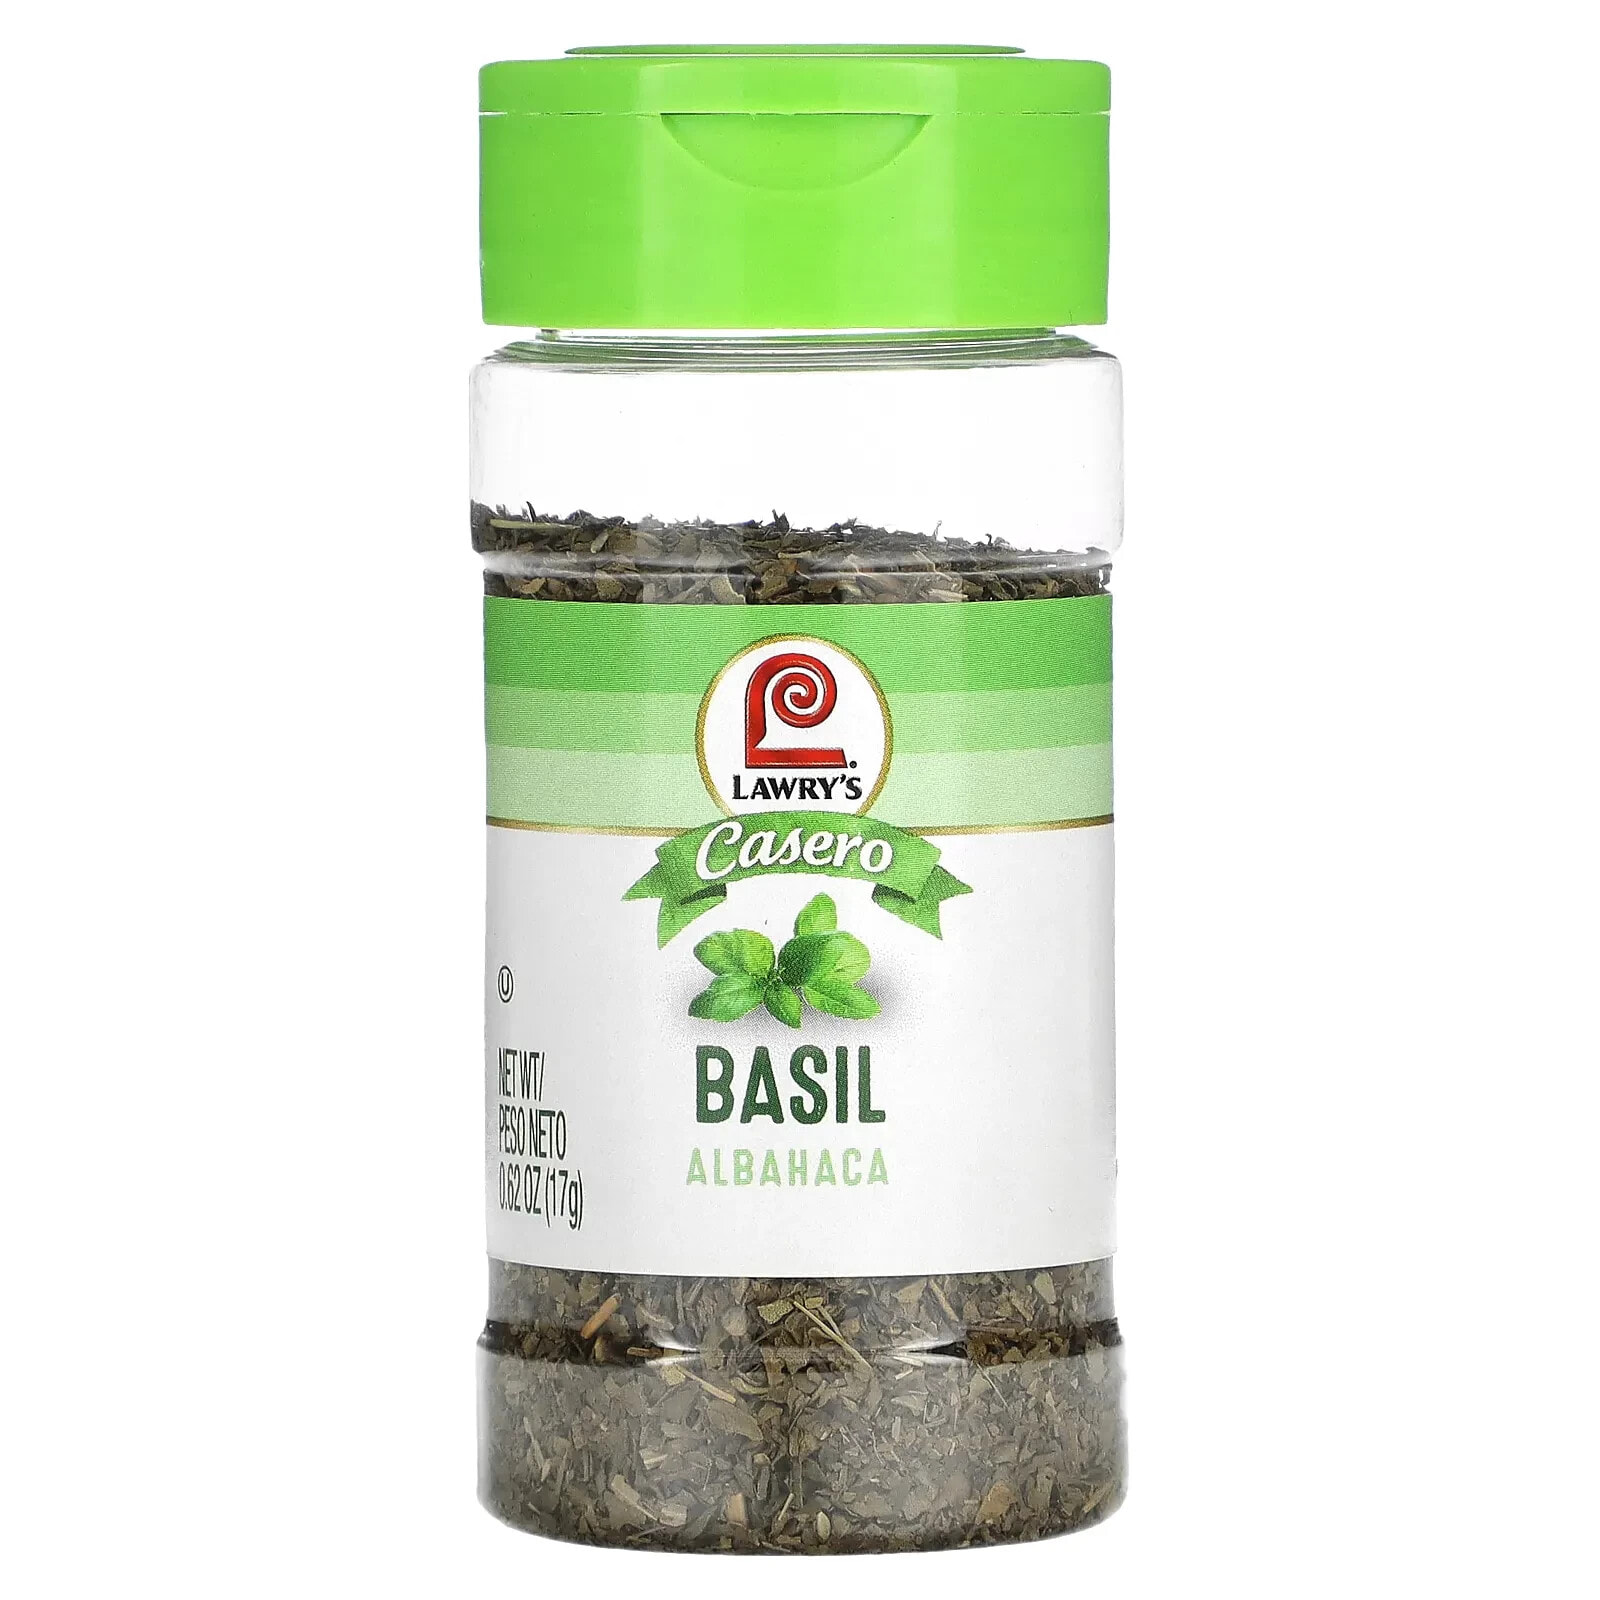 Casero, Basil, 0.62 oz (17 g)